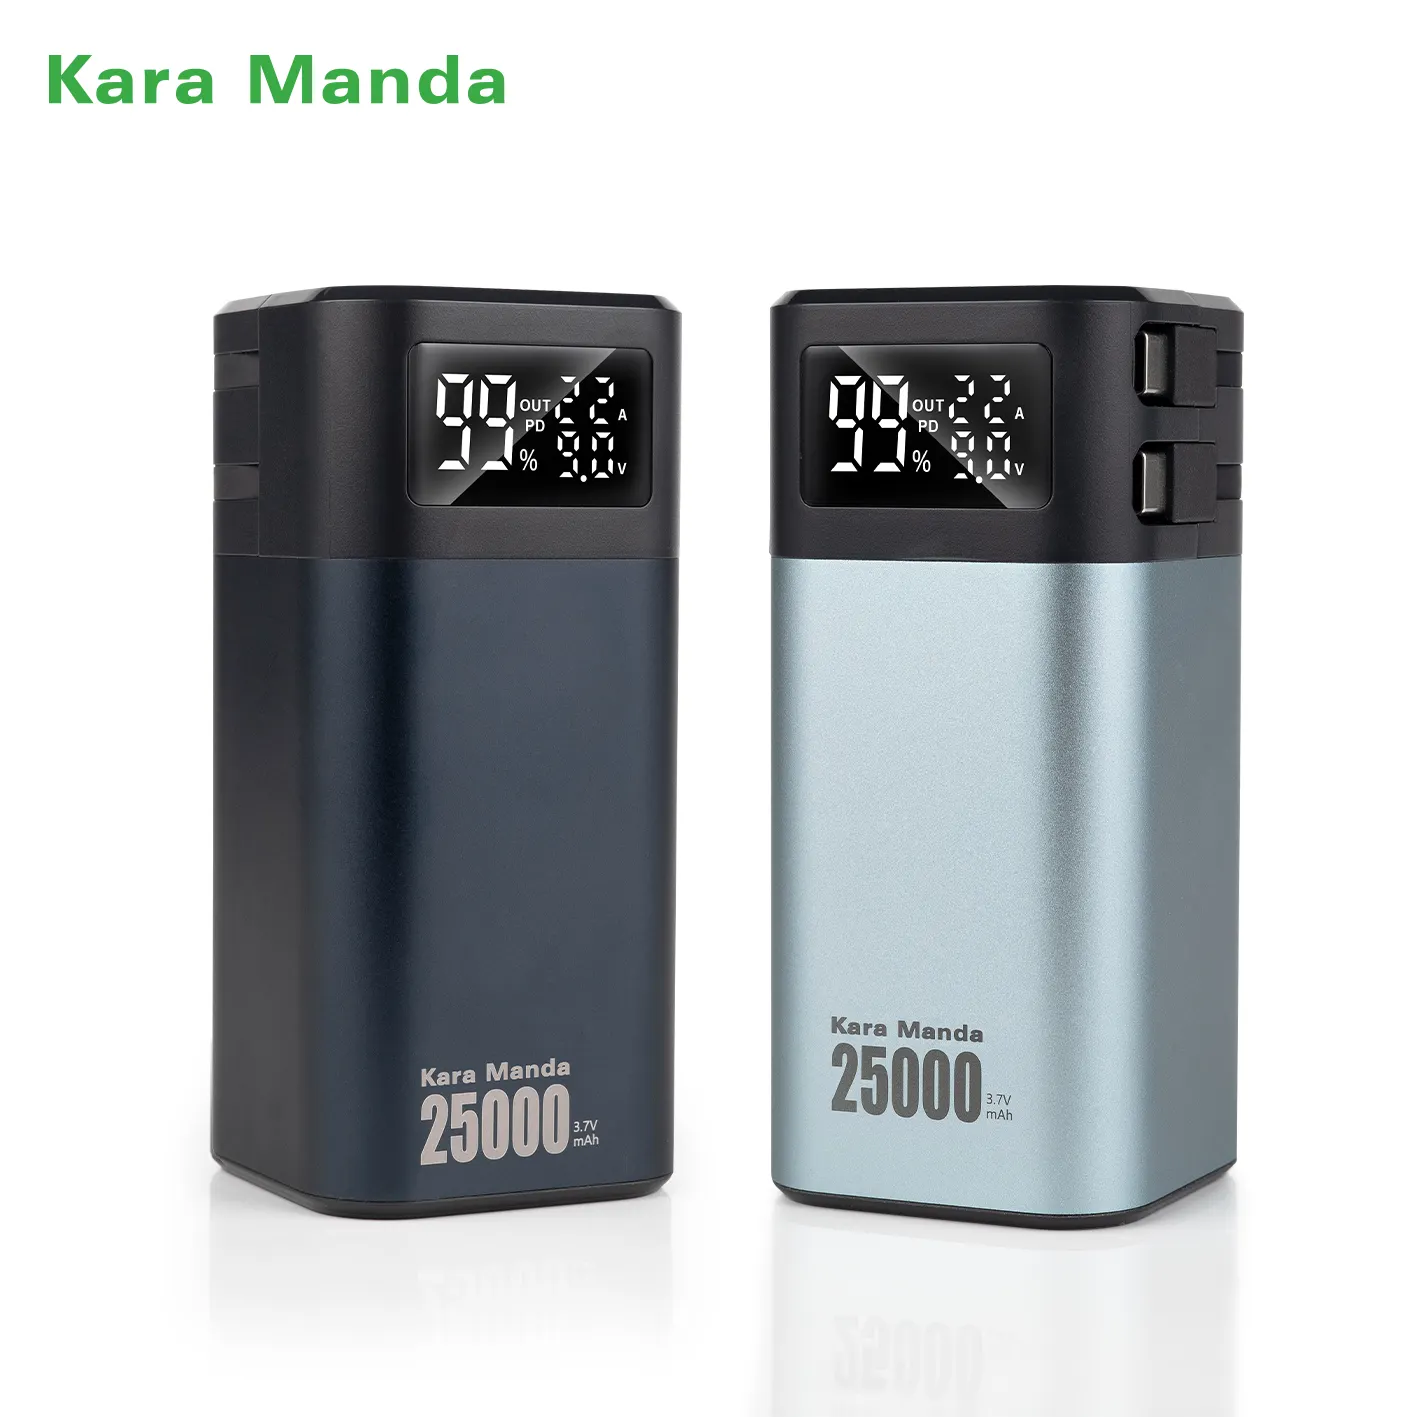 Kara Manda High Quality 4680 Car Gauge Power Bank For Tesla Large Capacity 25000mAh Power Bank Fast Charging Portable Power Bank